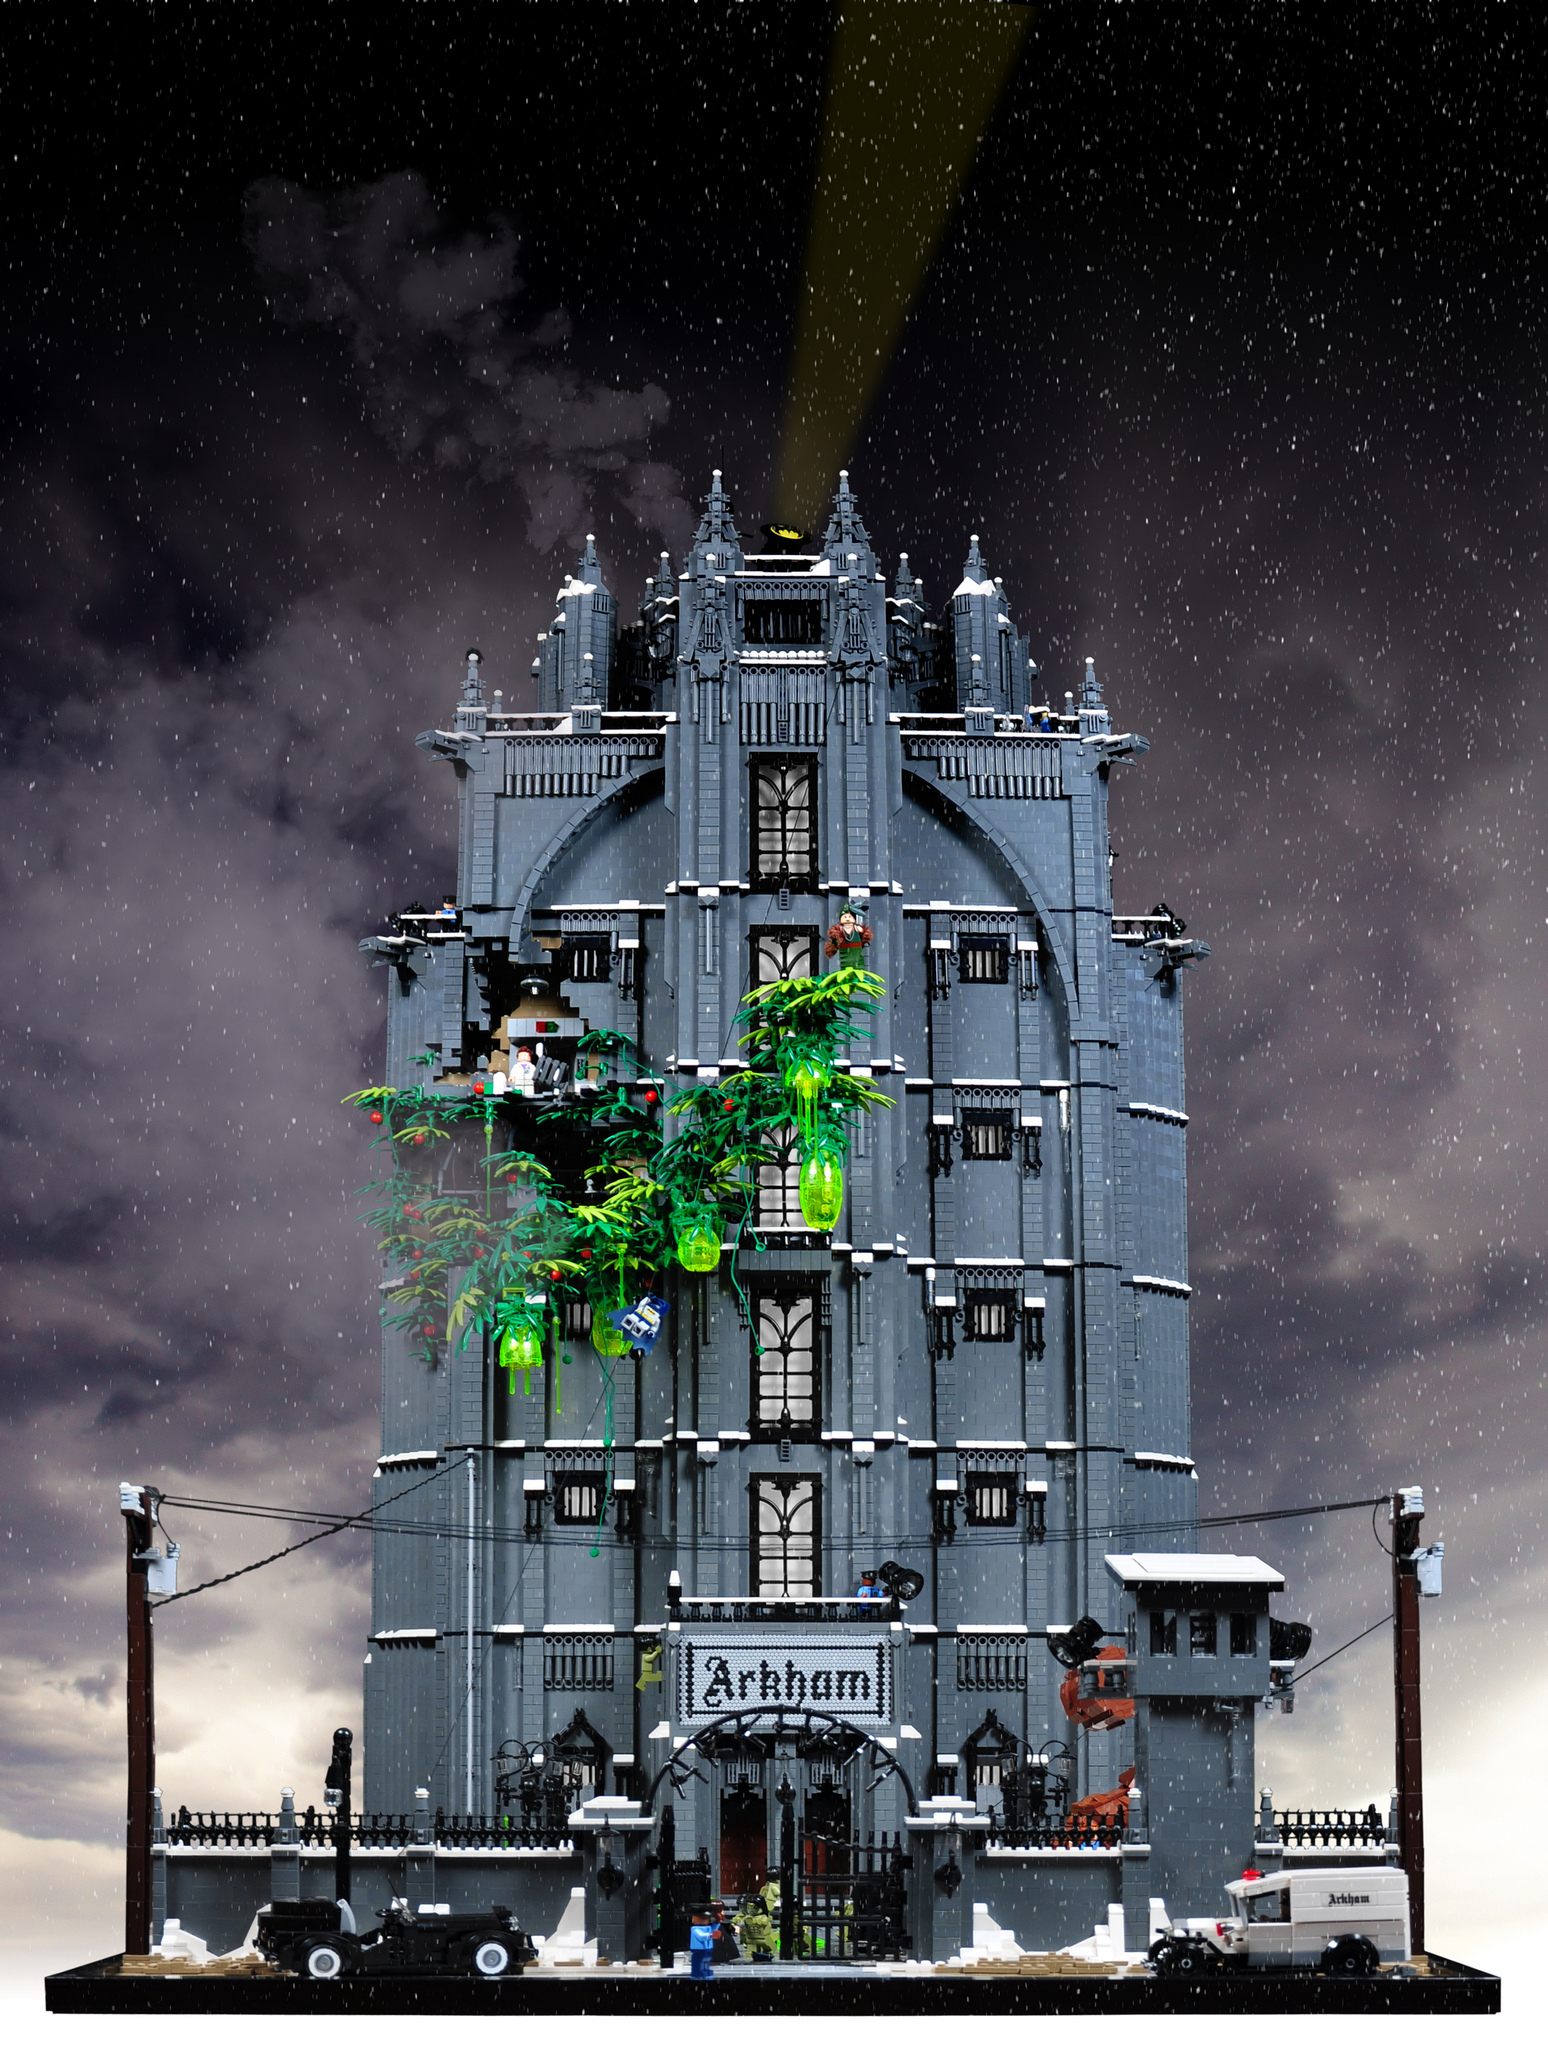 It Took One Year To Make This Criminally Insane LEGO Arkham Asylum